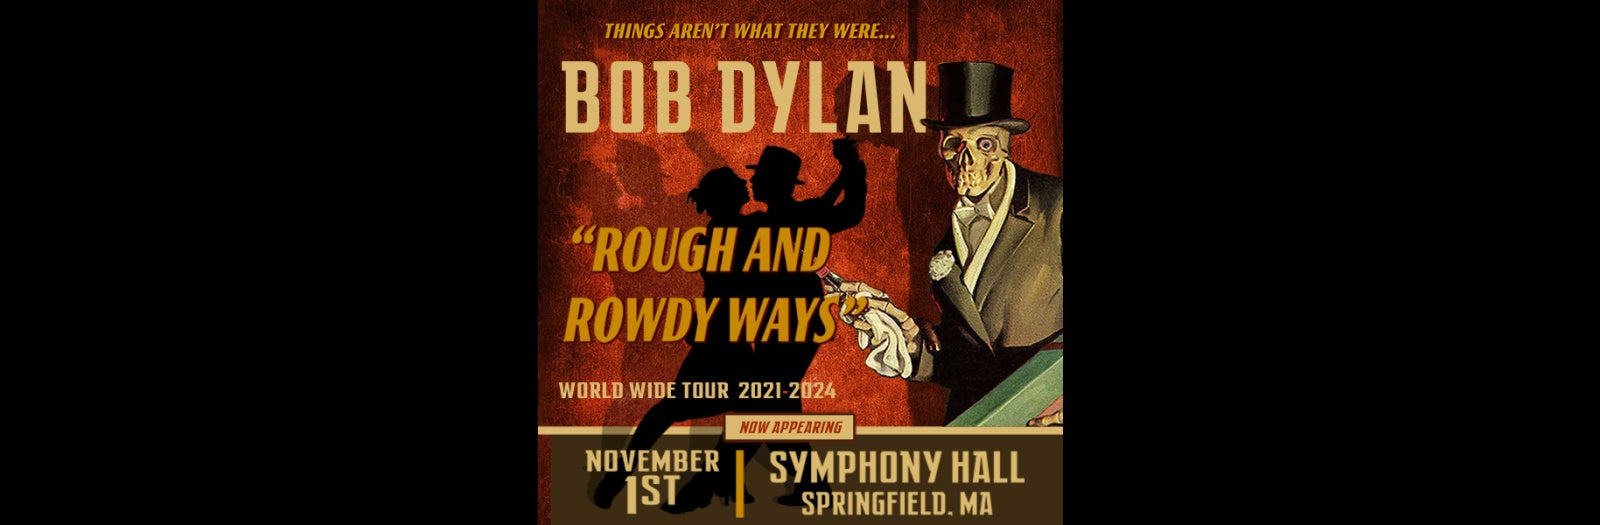 AEG Presents BOB DYLAN ROUGH AND ROWDY WAYS TOUR 2023